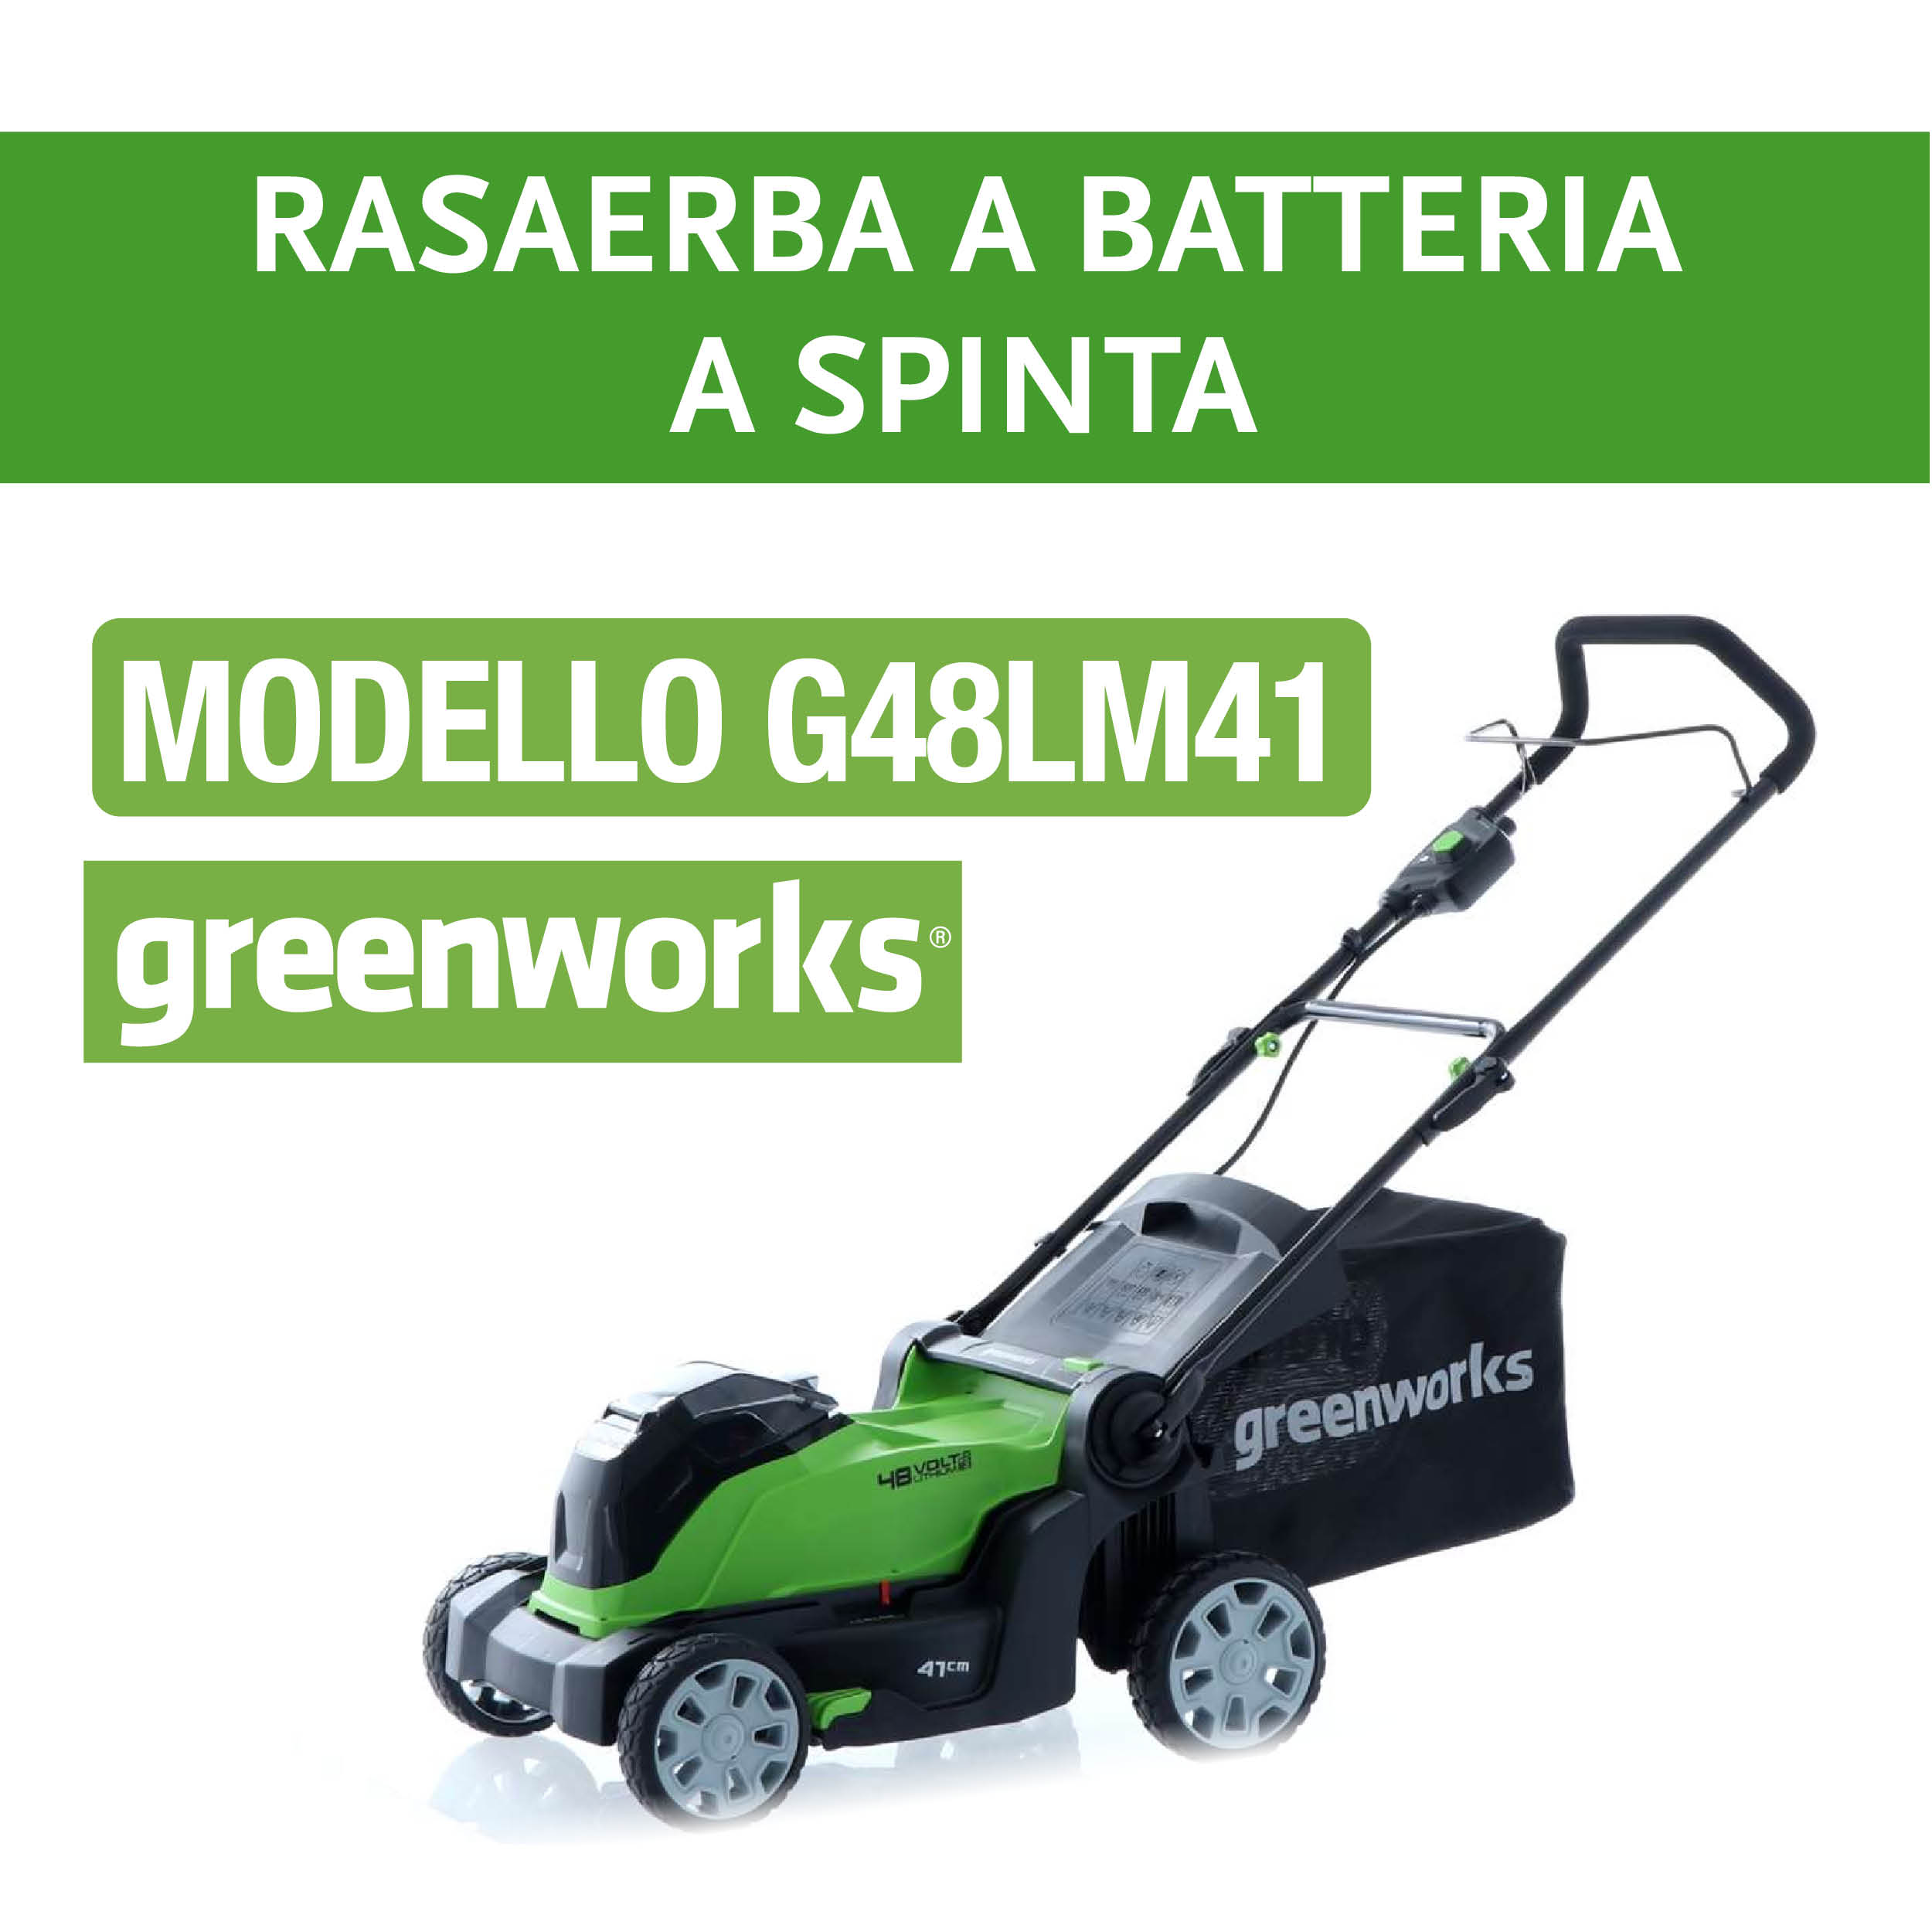 Rasaerba greenworks SAV G48LM41